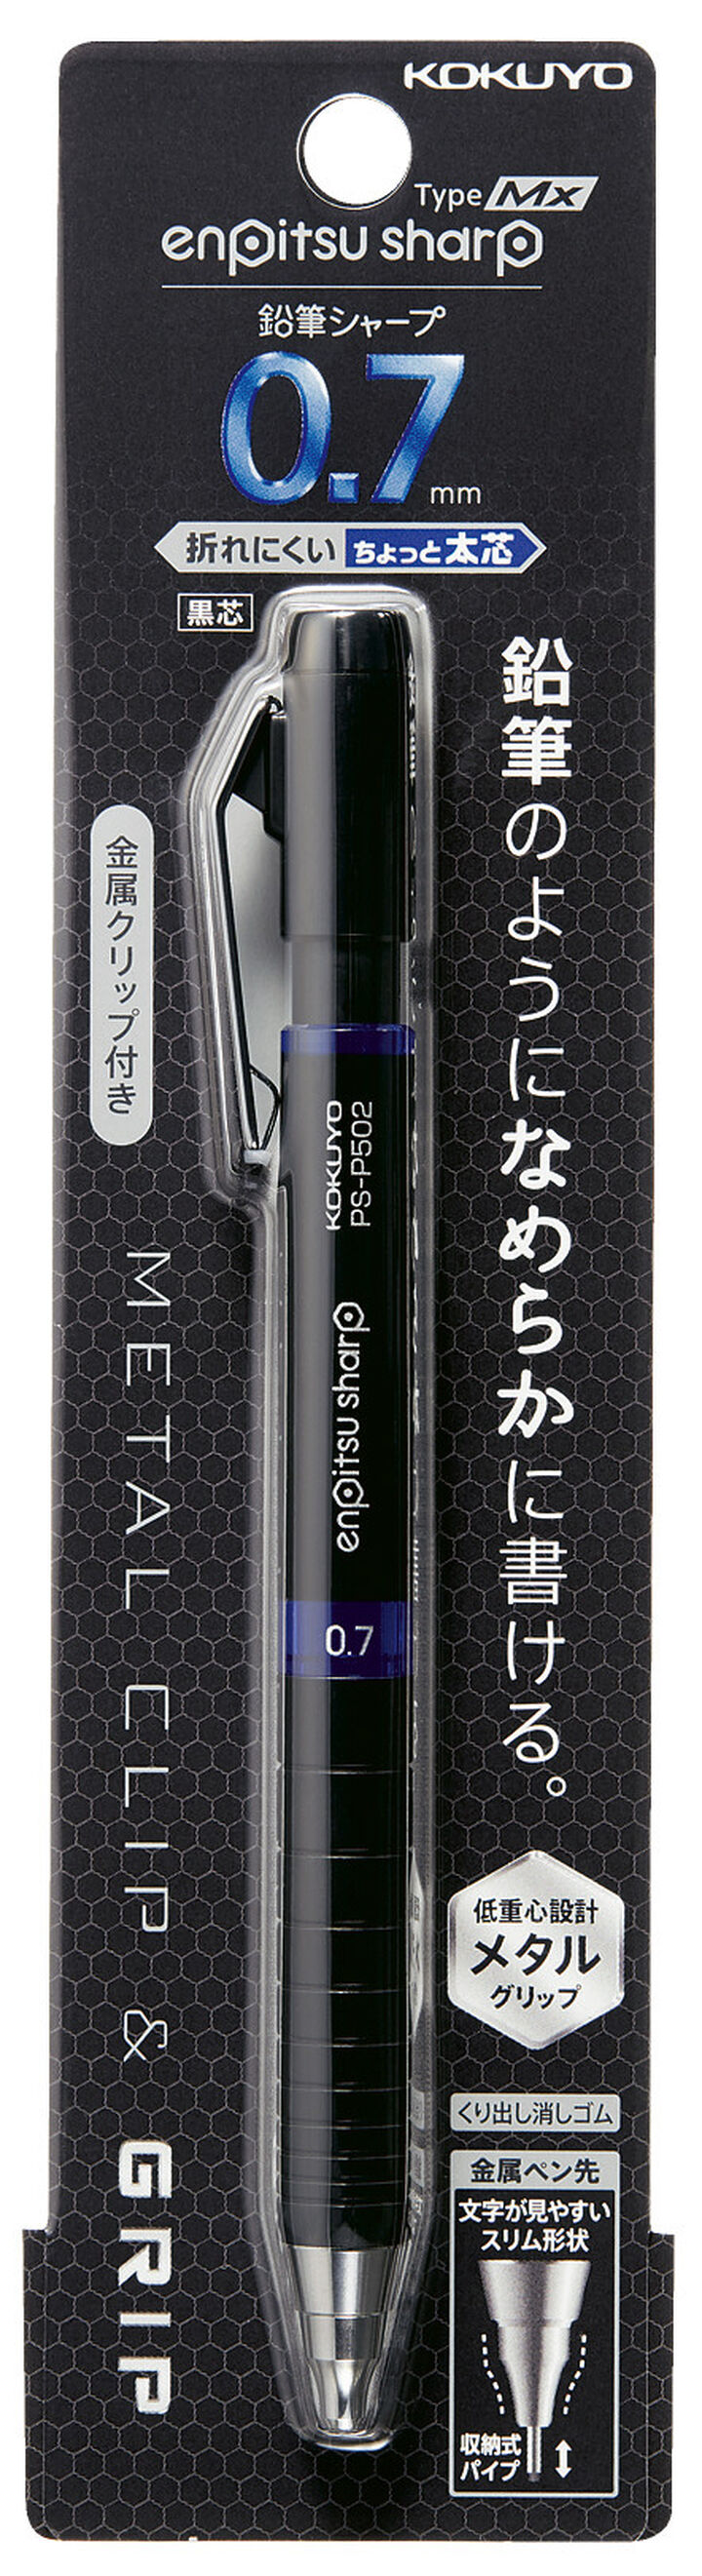 Enpitsu sharp mechanical pencil TypeM 0.7mm  Metal Grip,Blue, medium